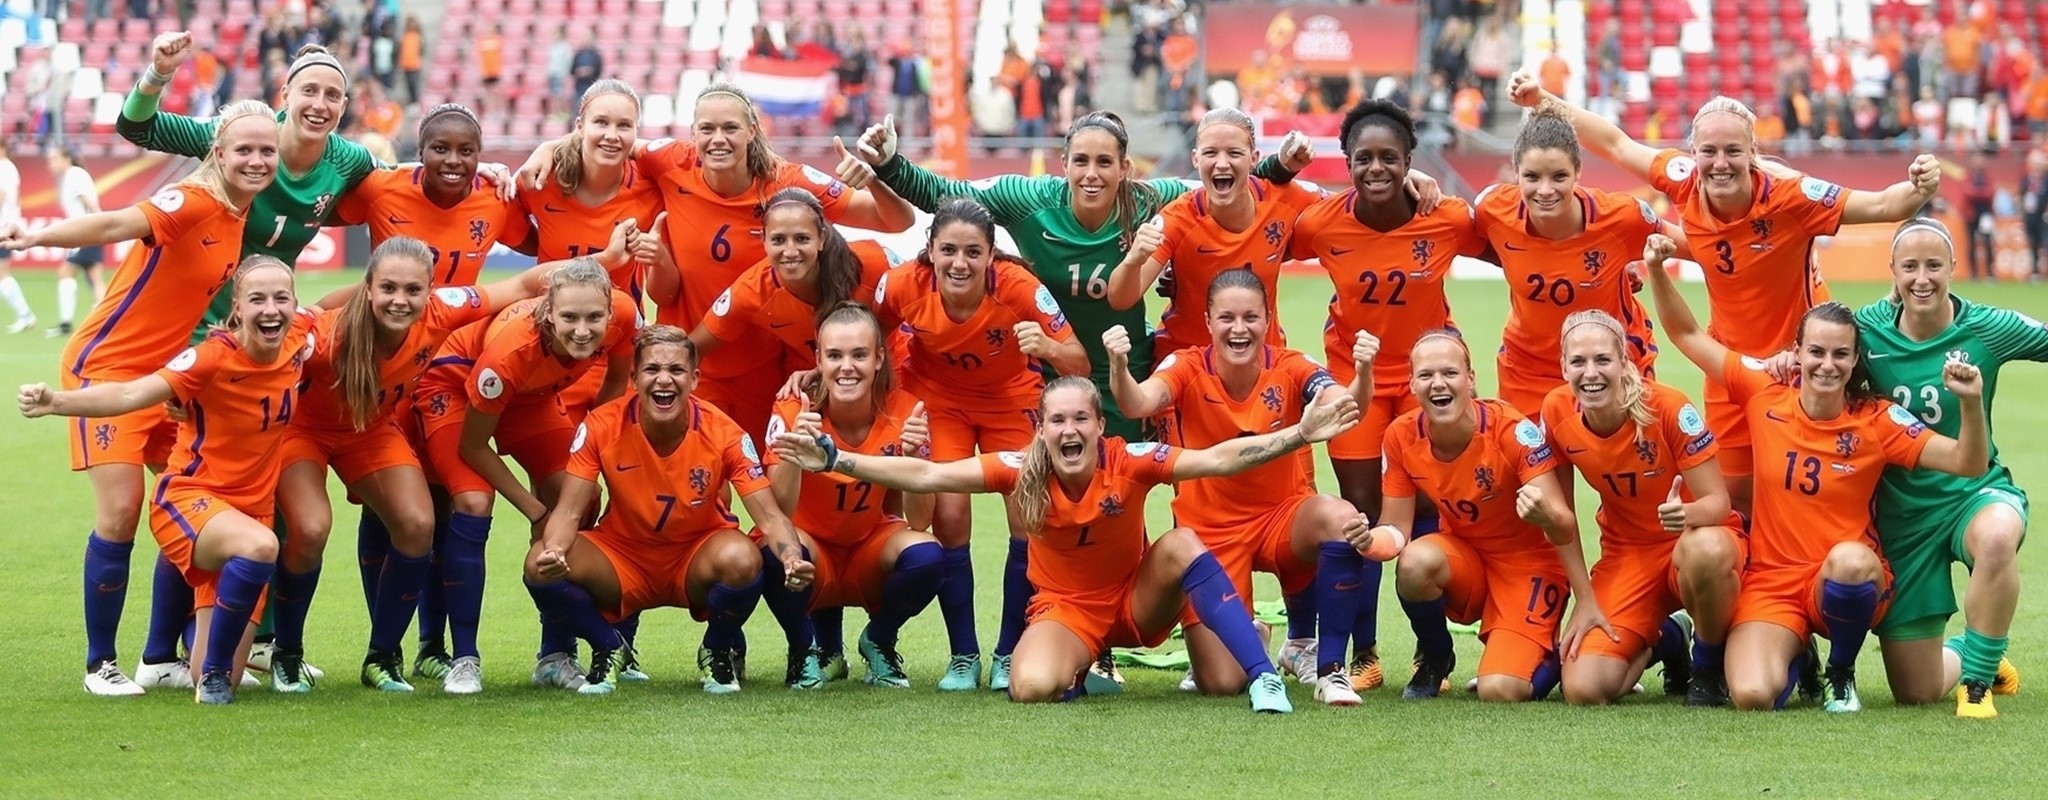 Inaugurada la Euro femenina de Holanda 2017. Las "Tulipanes" vencen a Noruega